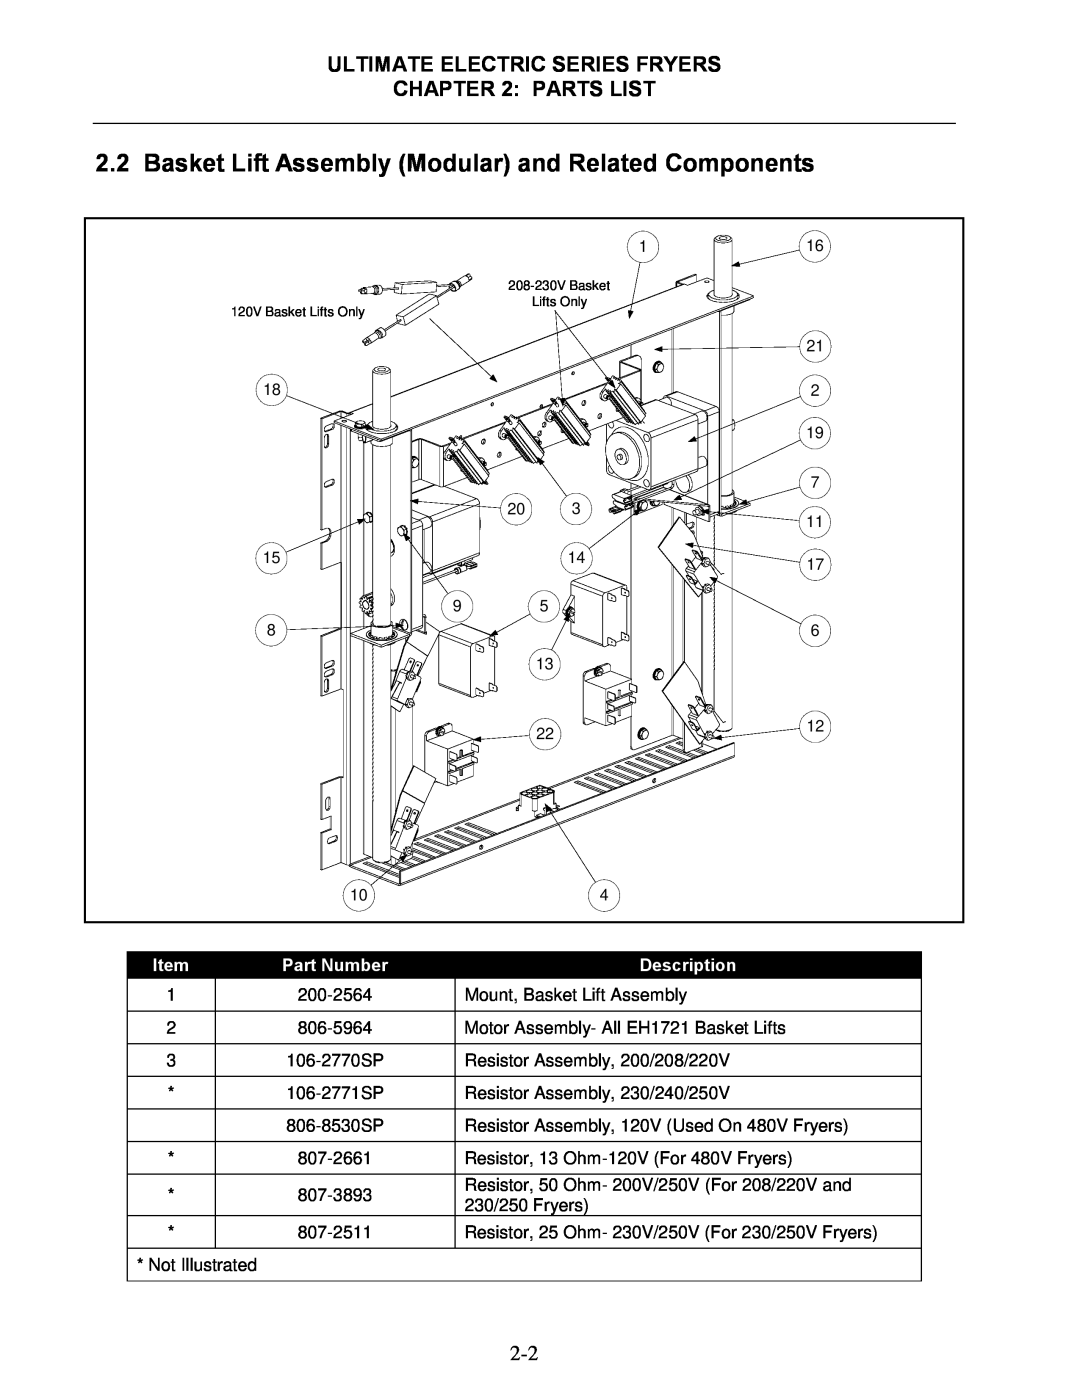 Frymaster manual Parts List, Ultimate Electric Series Fryers, Part Number, Description 